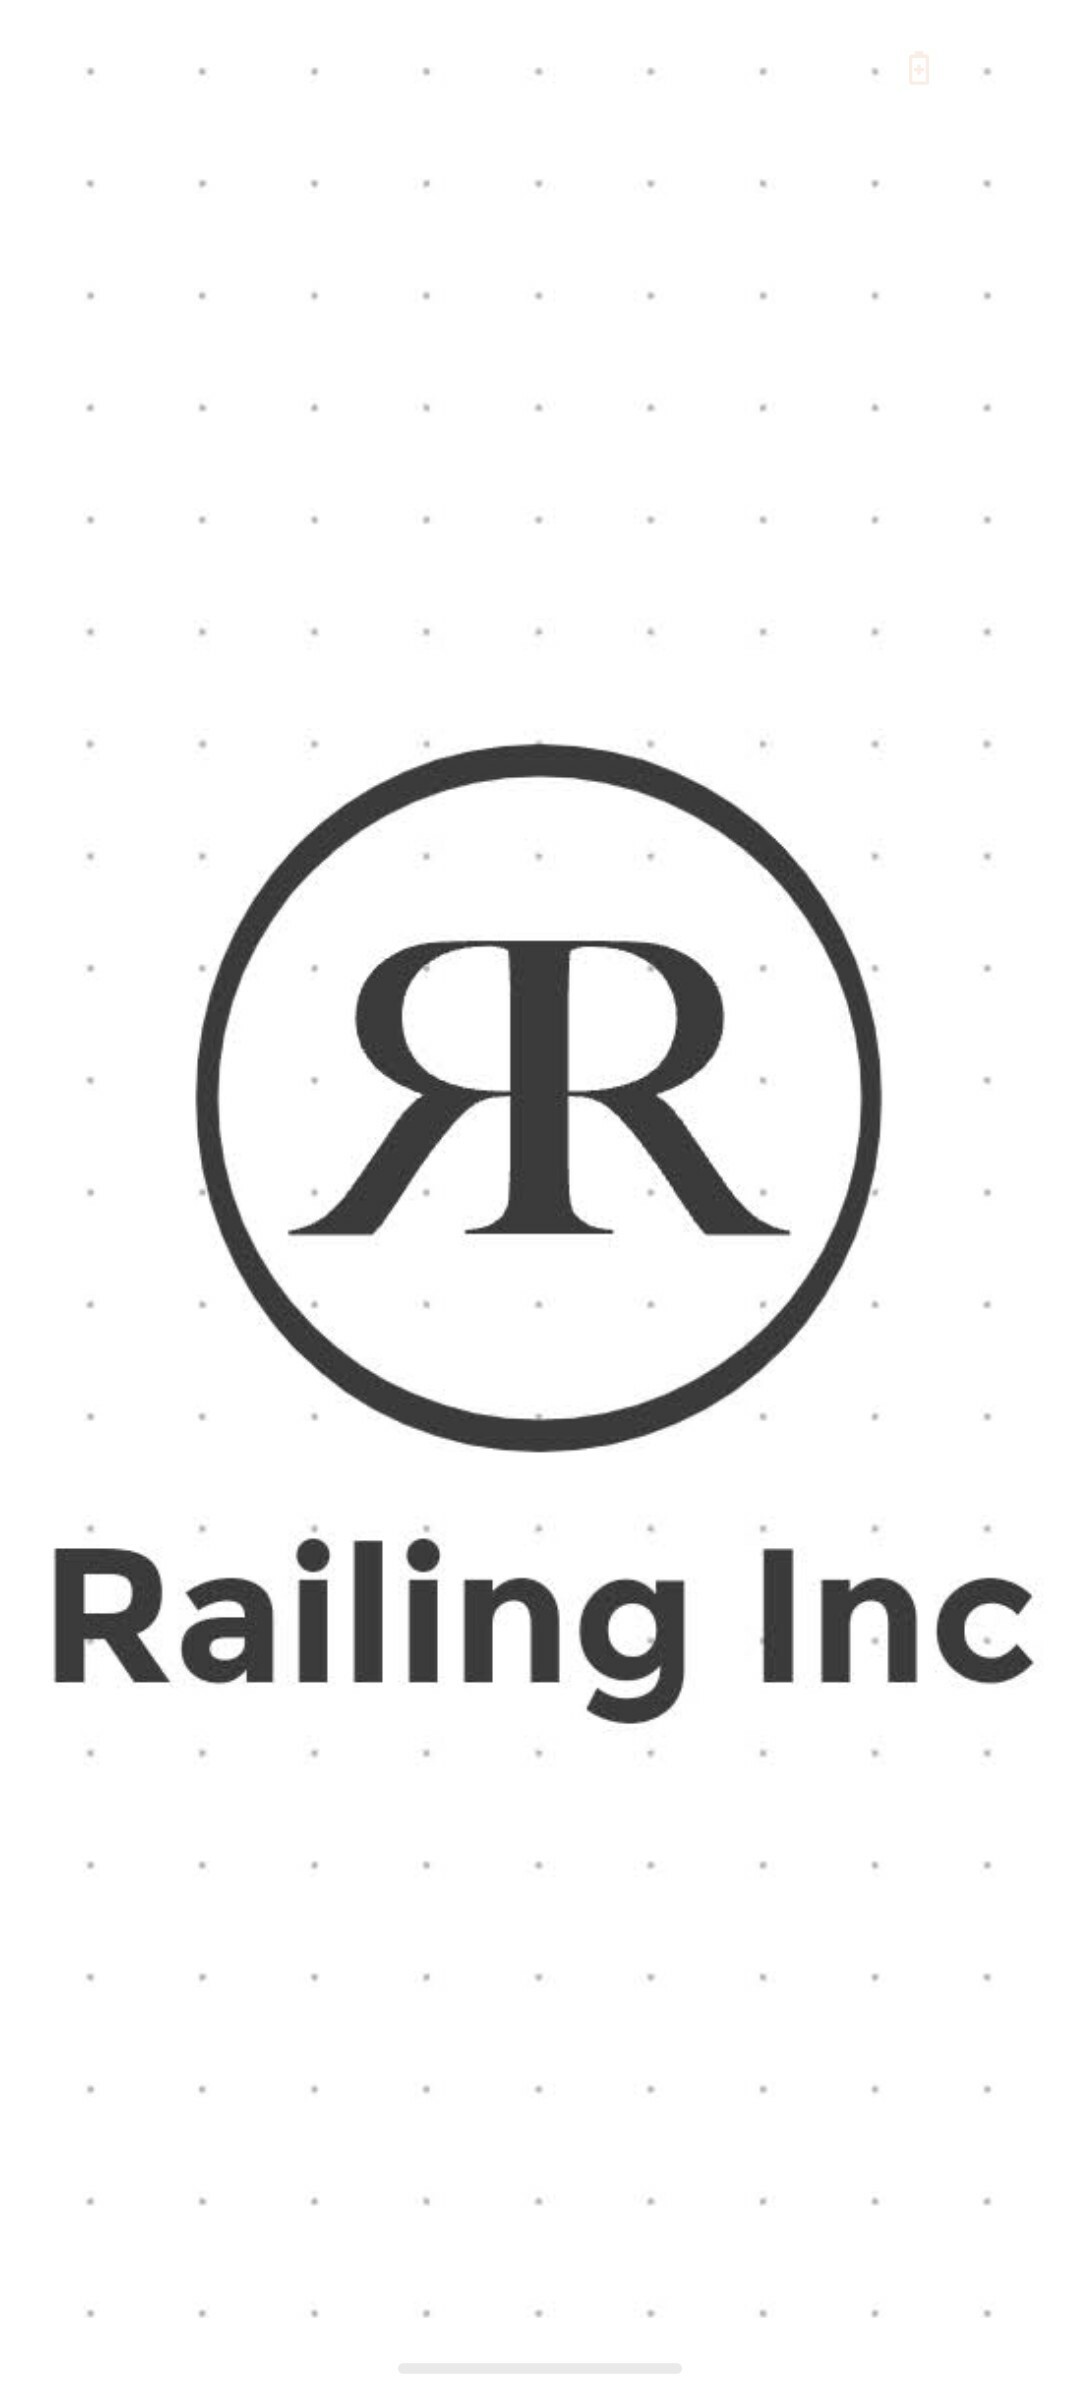 Railing Inc.'s logo